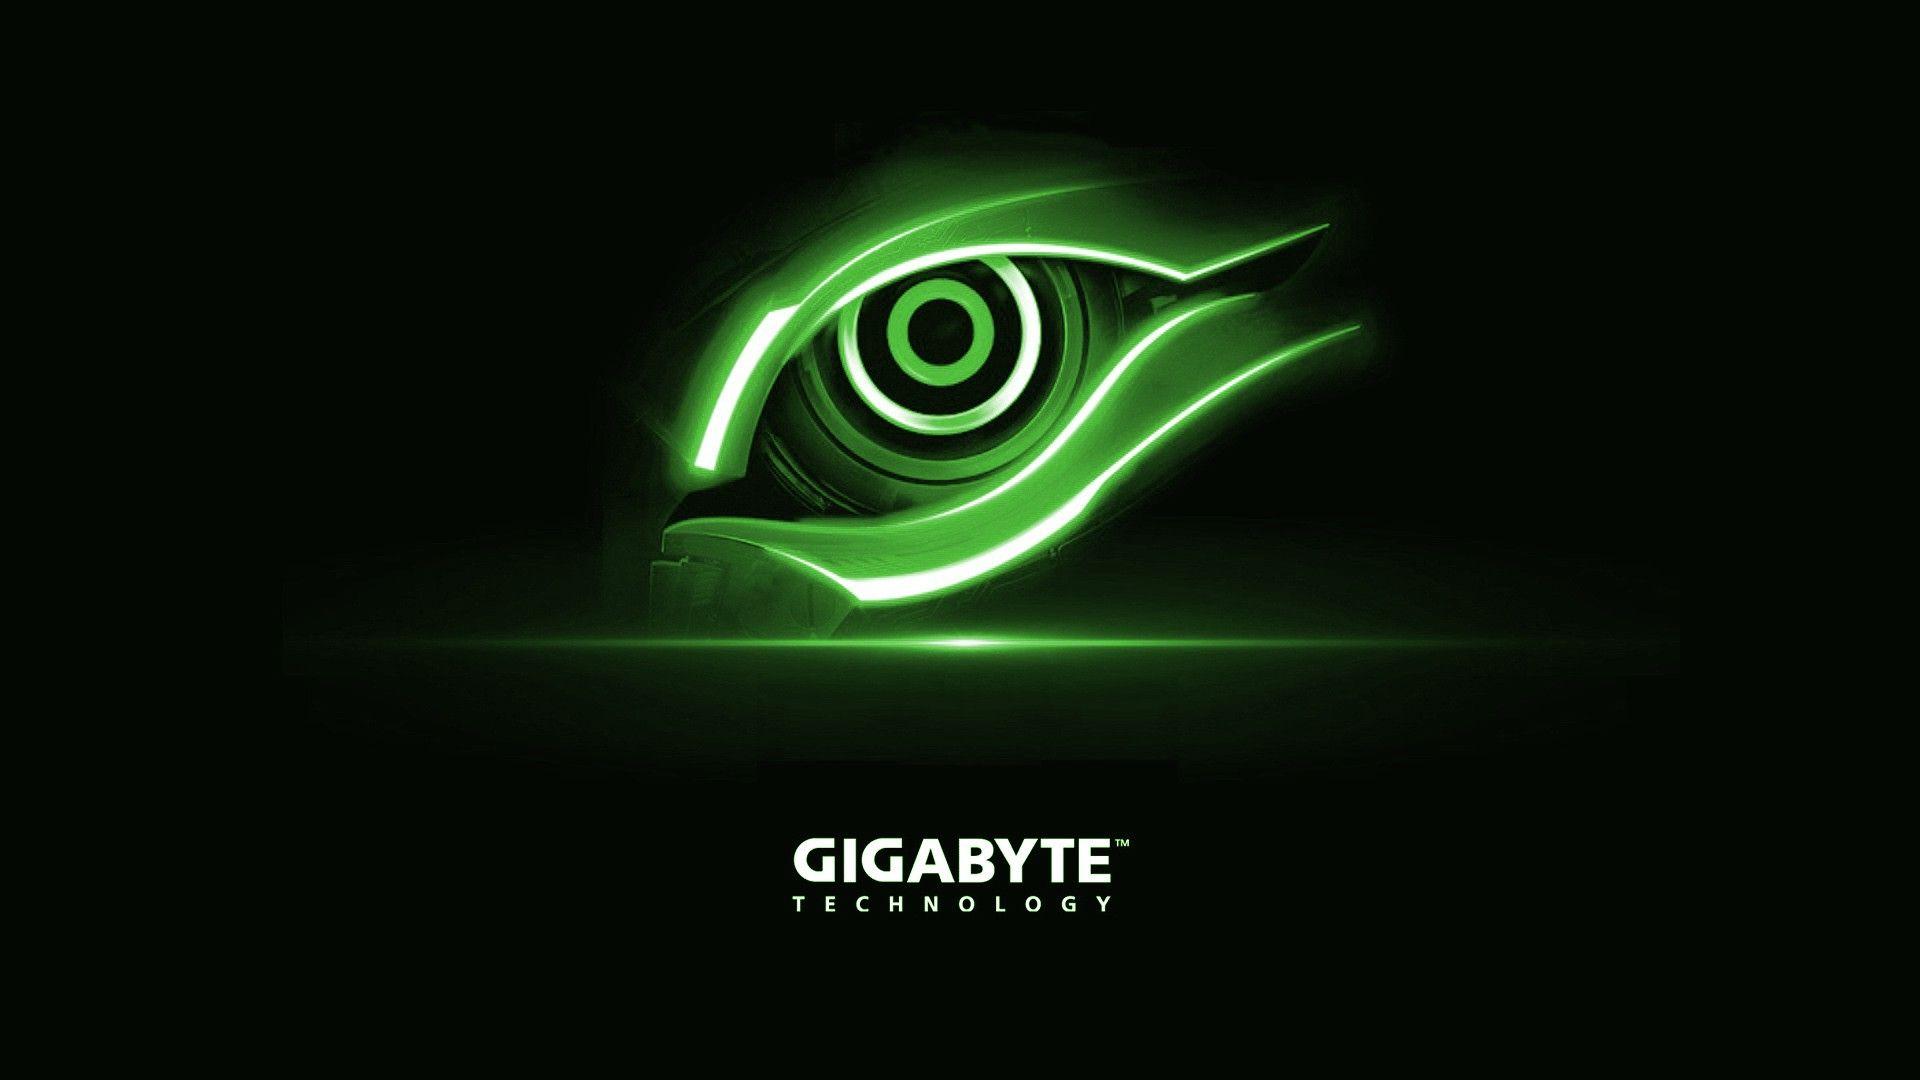 Green Eye Tech Logo - Gigabyte Technology Green Eye Logo Wallpaper free desktop ...